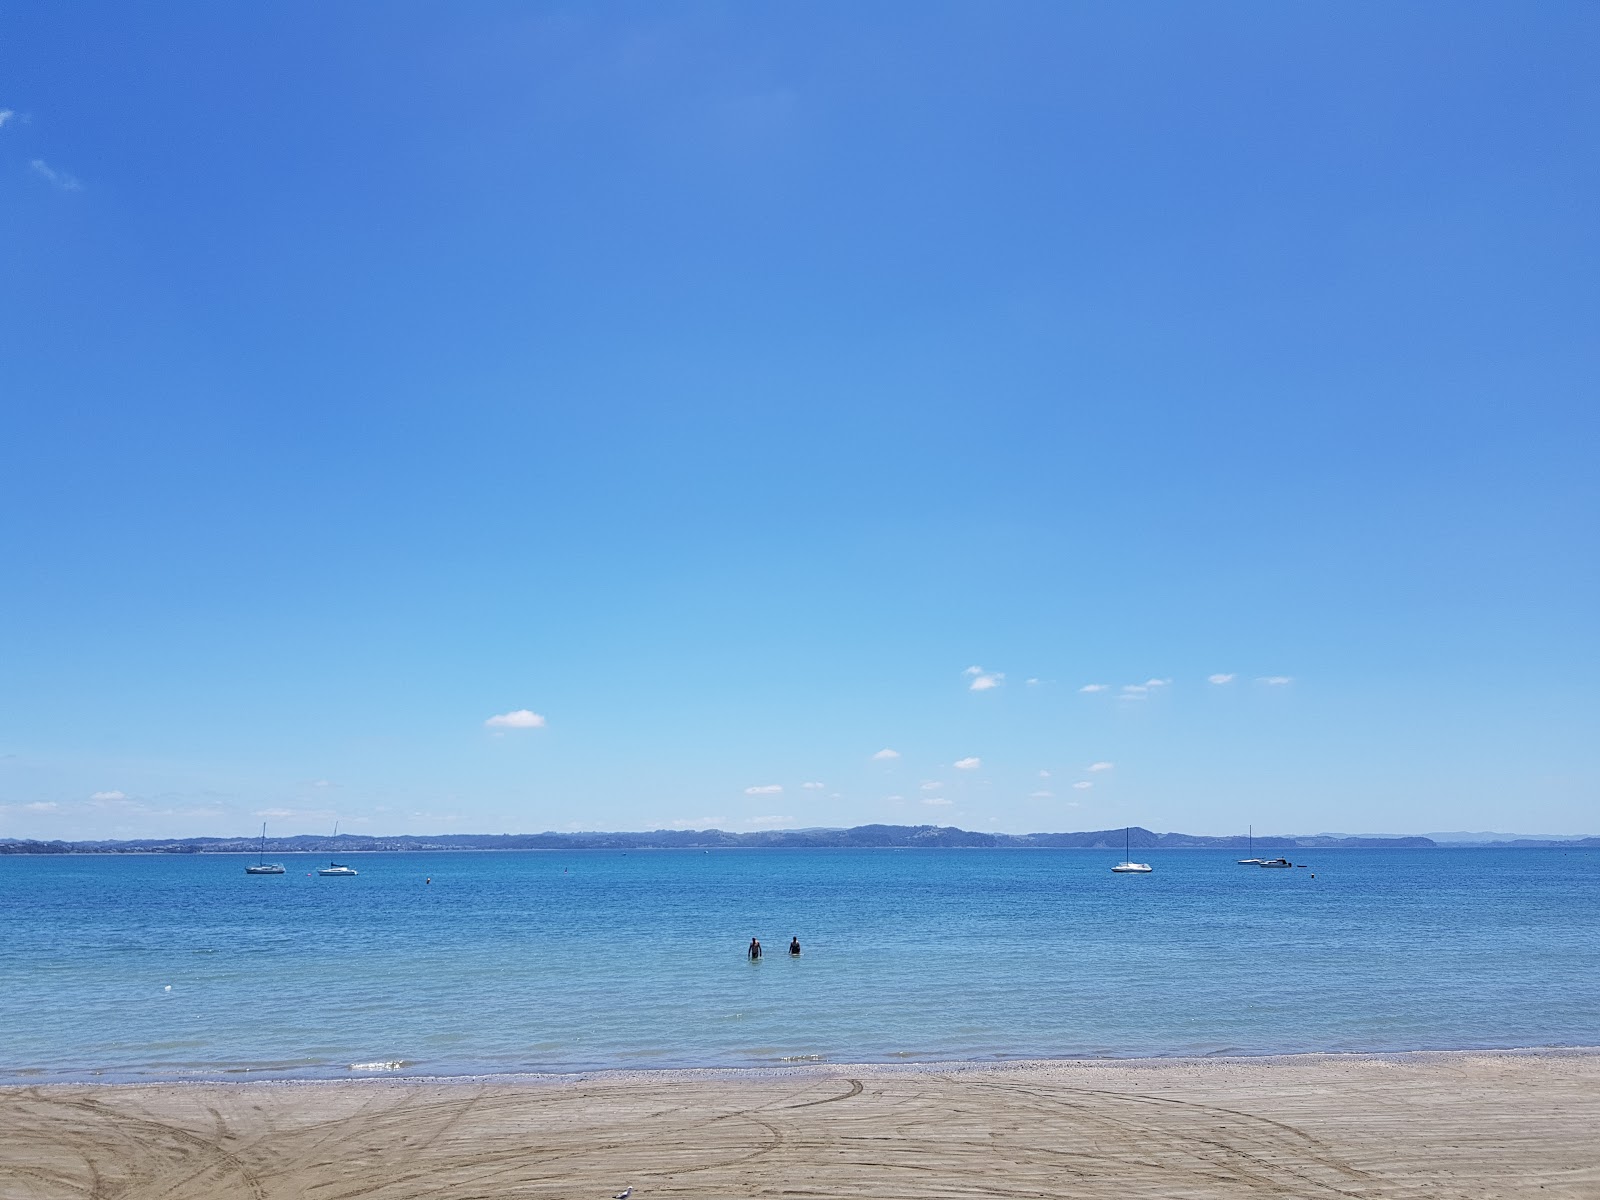 Fotografie cu Tindalls Beach - locul popular printre cunoscătorii de relaxare